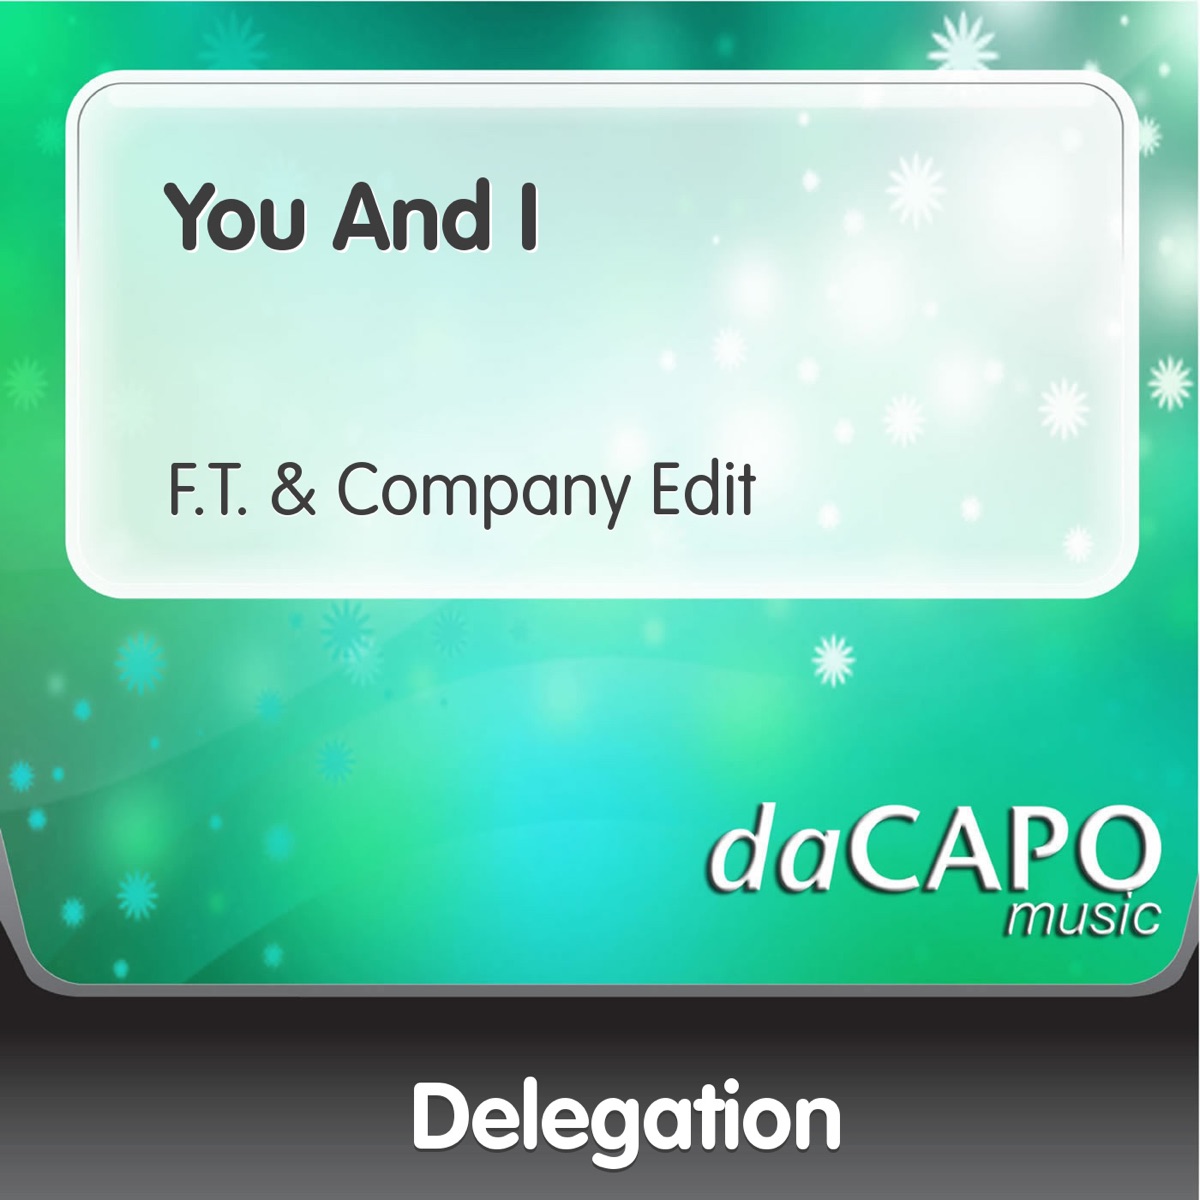 ‎Oh Honey - Single - Album by Delegation - Apple Music